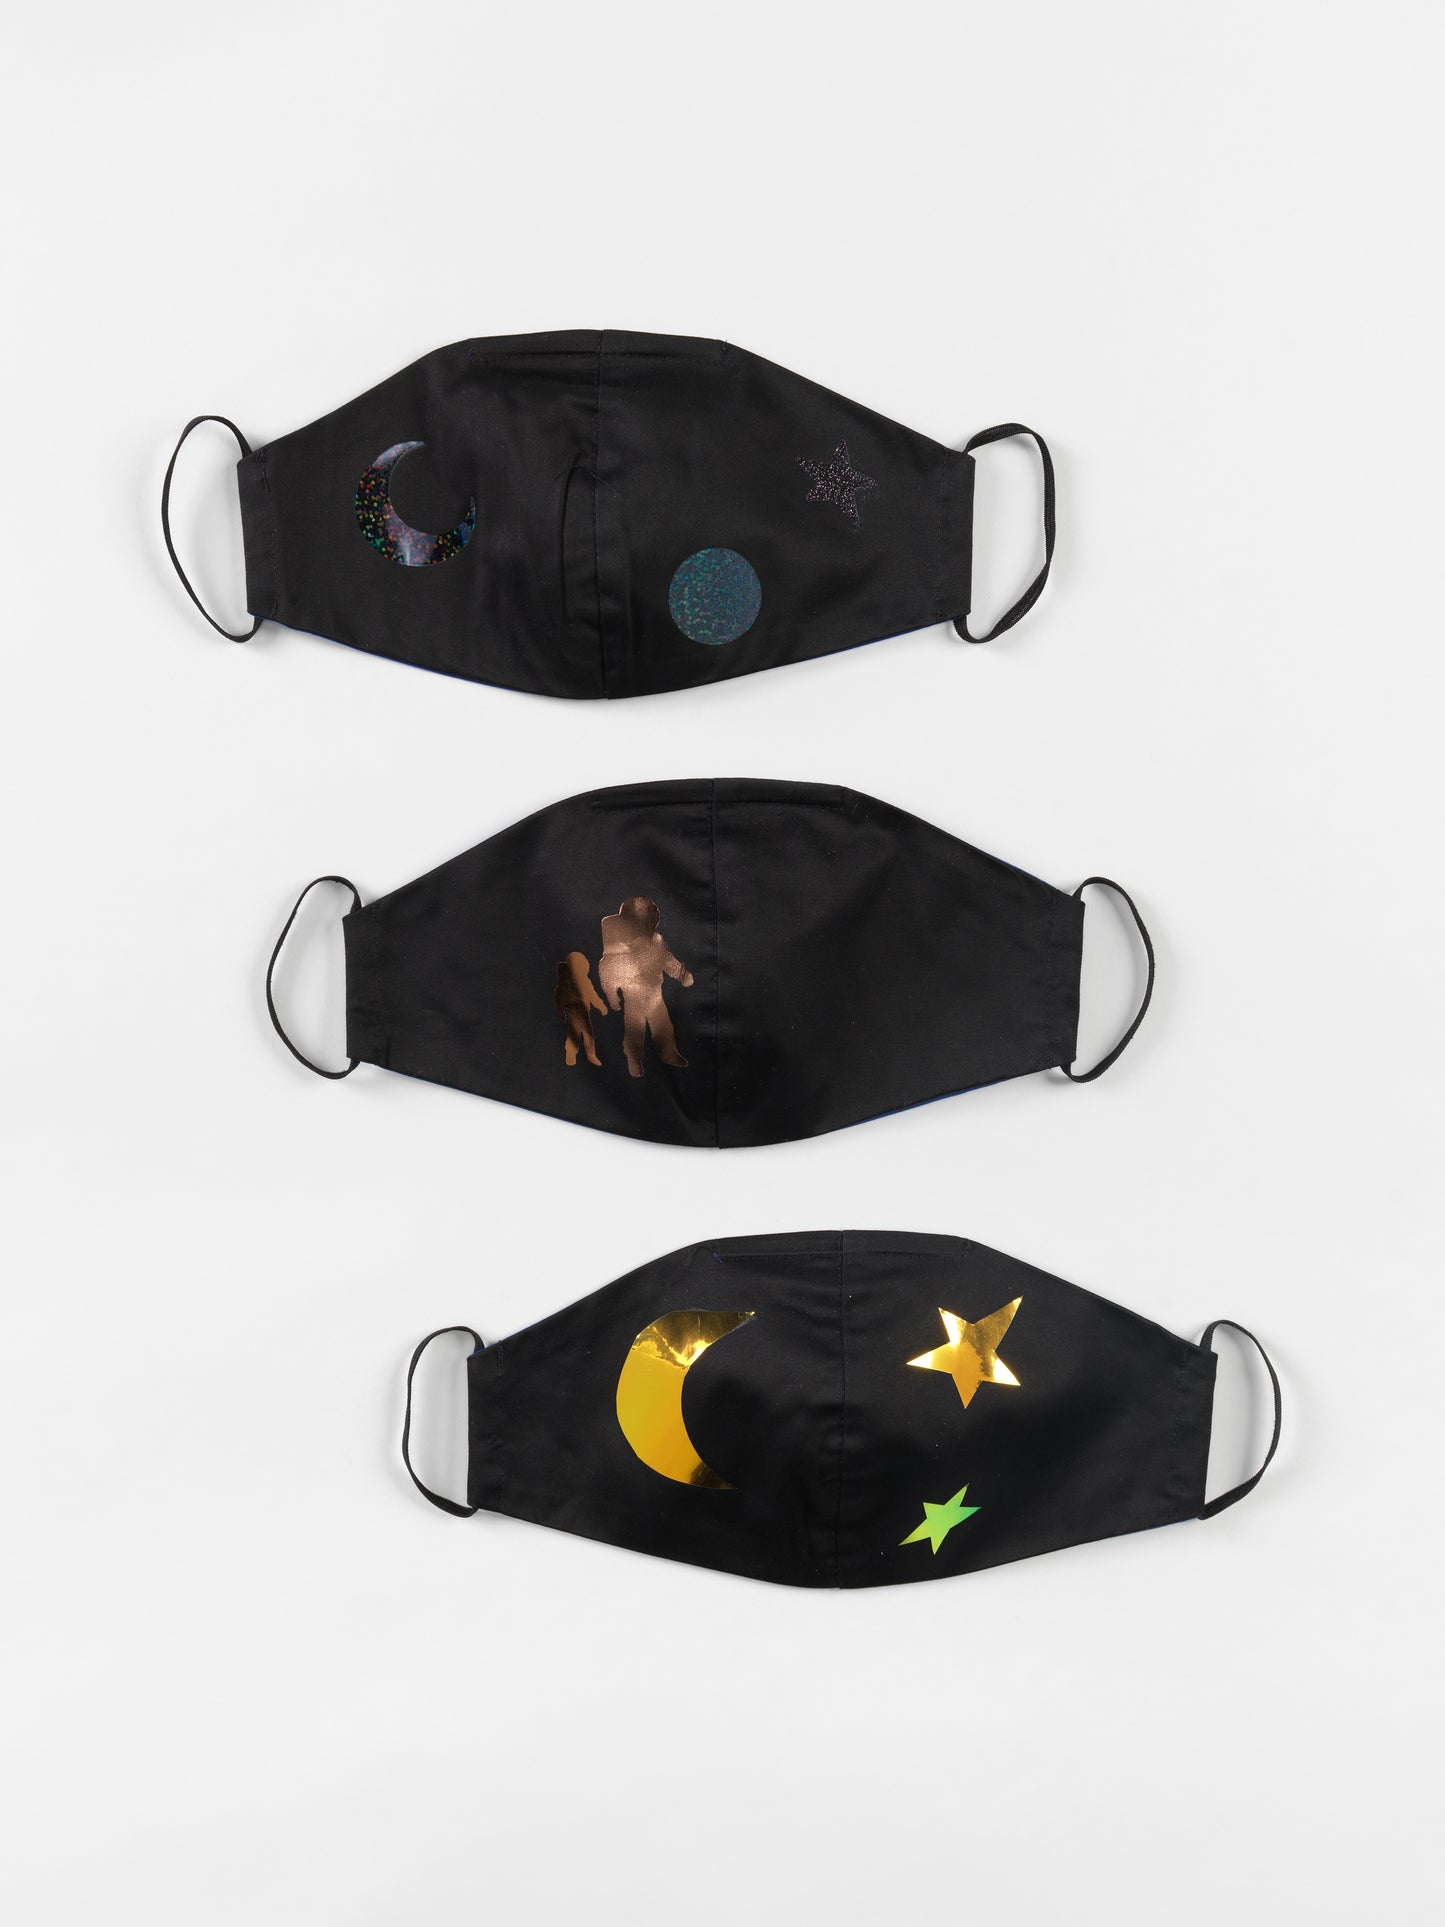 Space case: Andrea Lauer  Original, Limited-Edition Masks